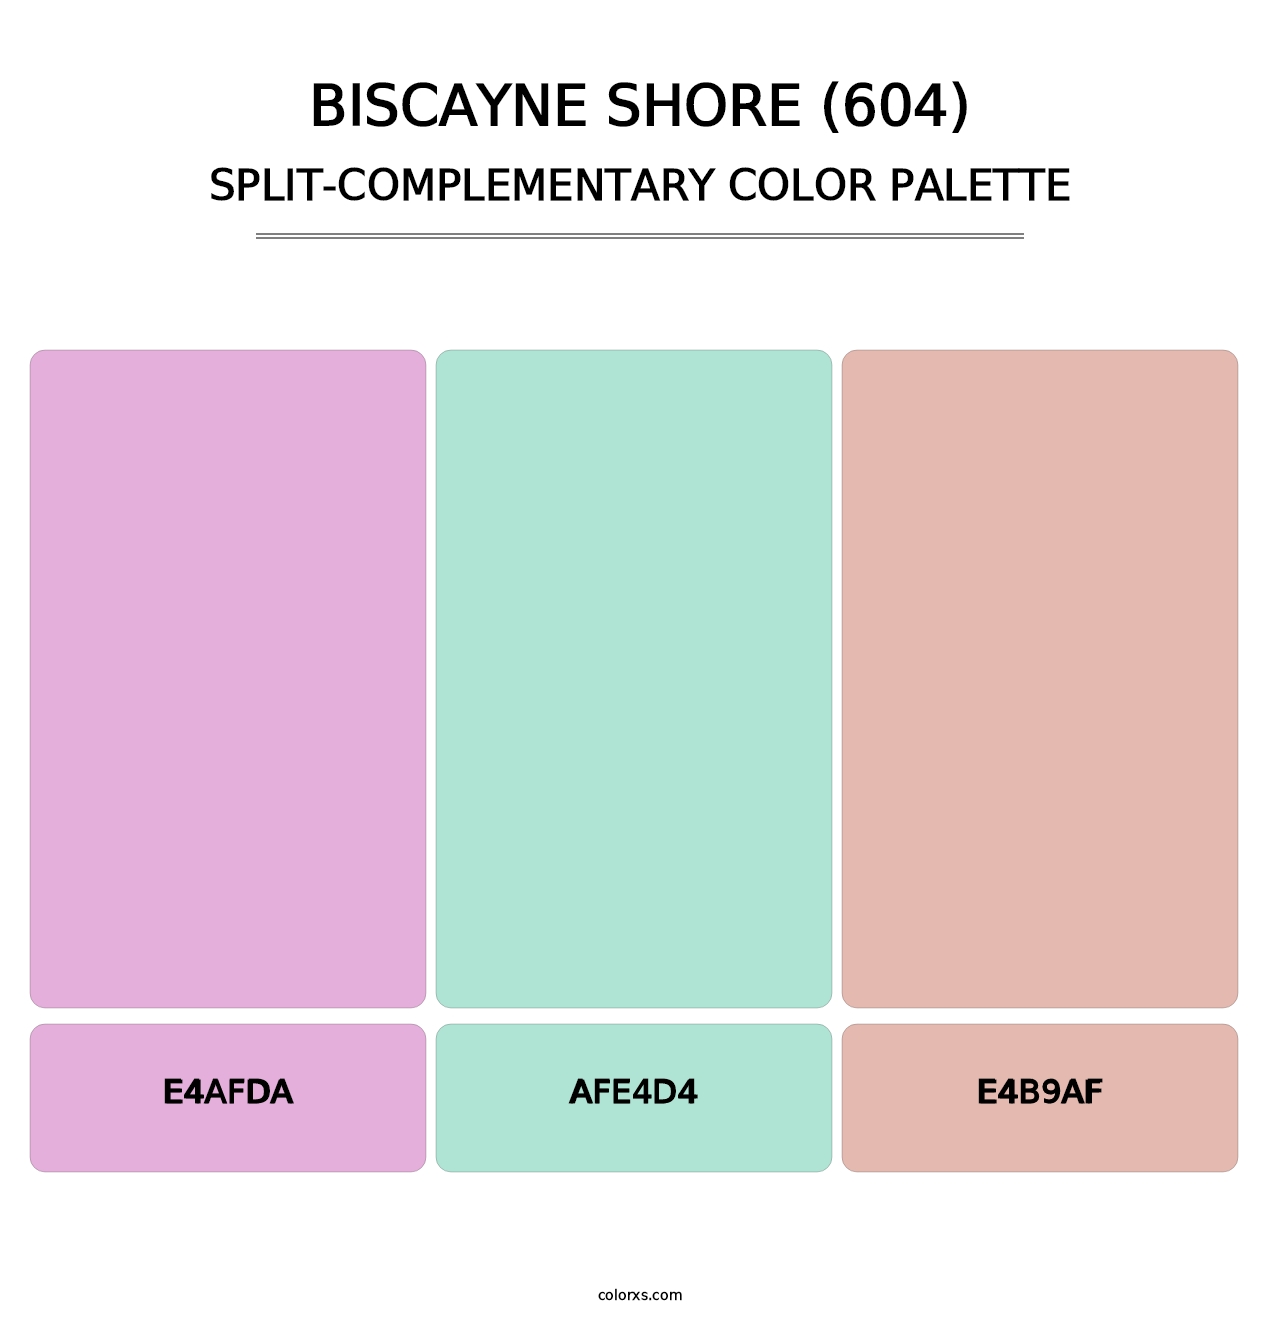 Biscayne Shore (604) - Split-Complementary Color Palette